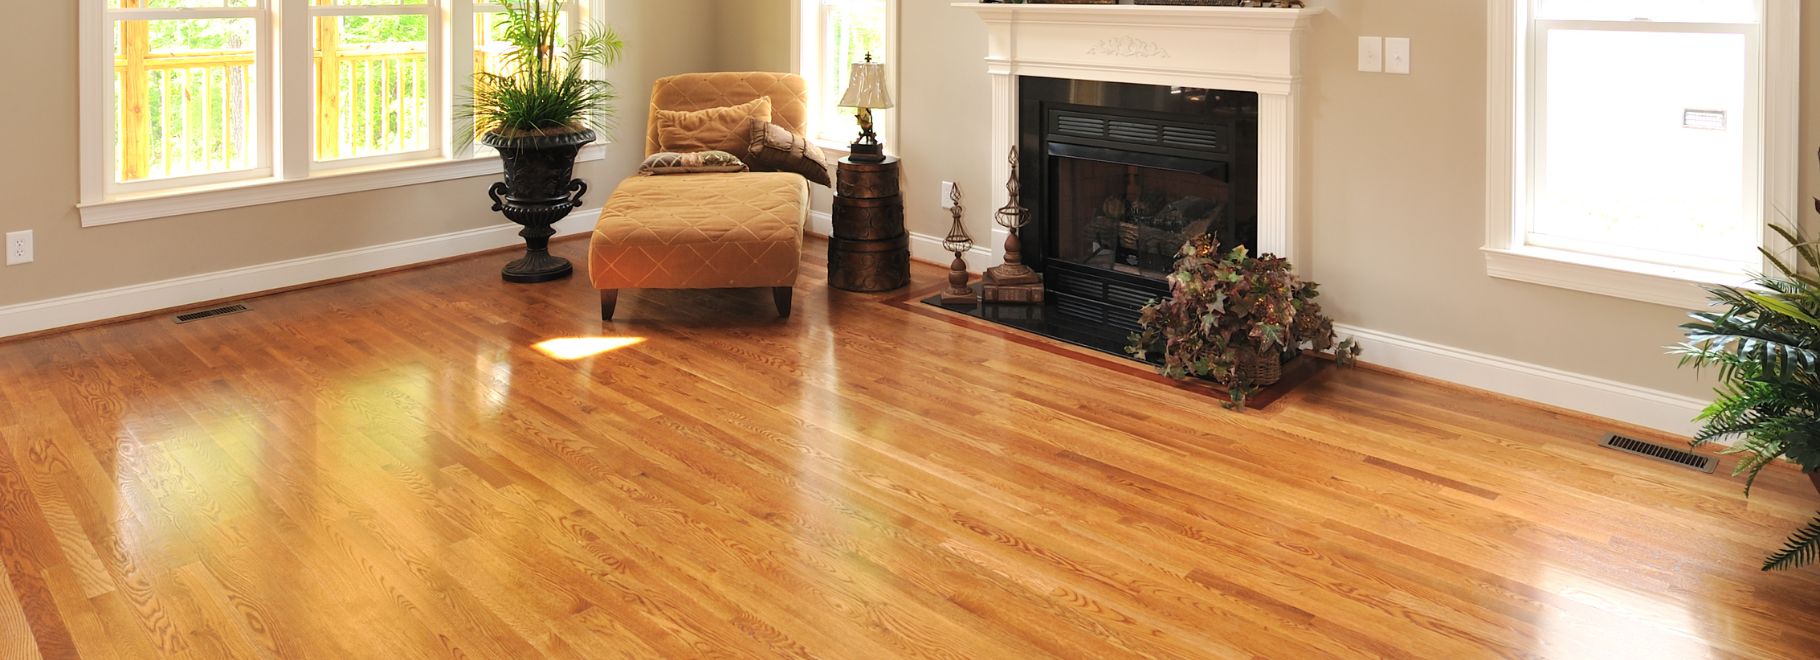 hardwood flooring supplier